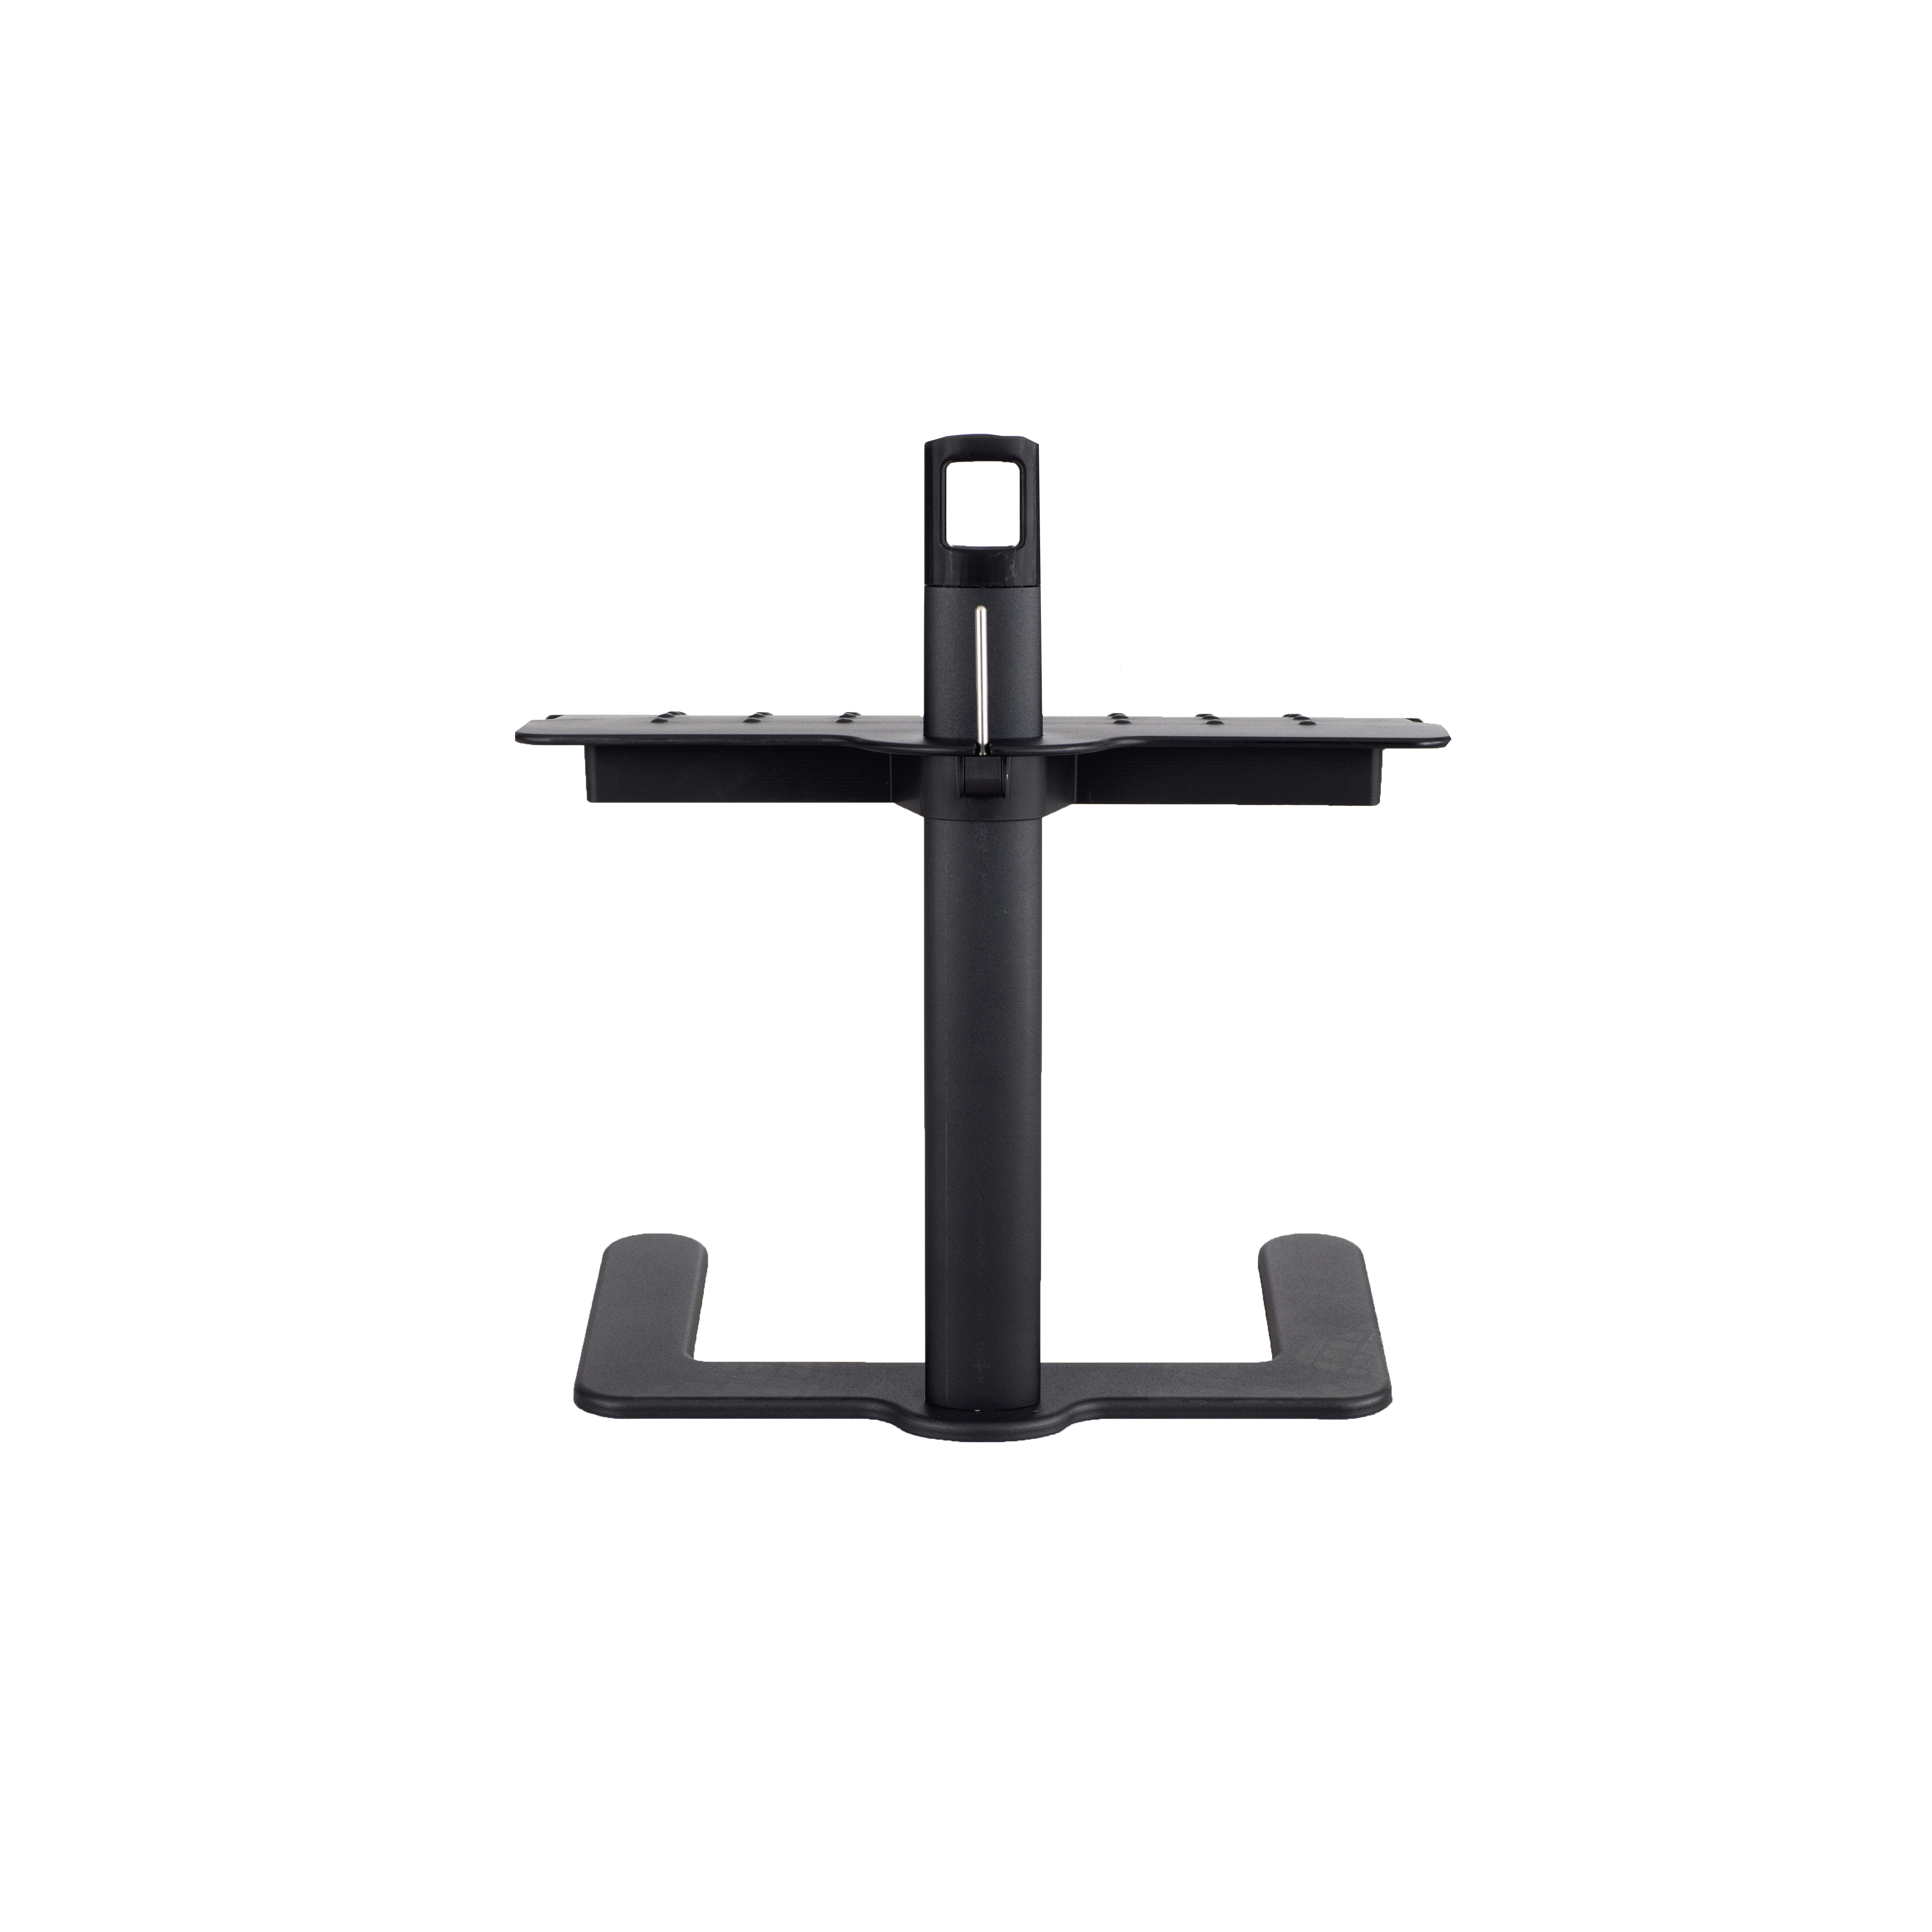 Safco Products 2120BL RestEase Adjustable Footrest Black Awesome A1 for sale online 